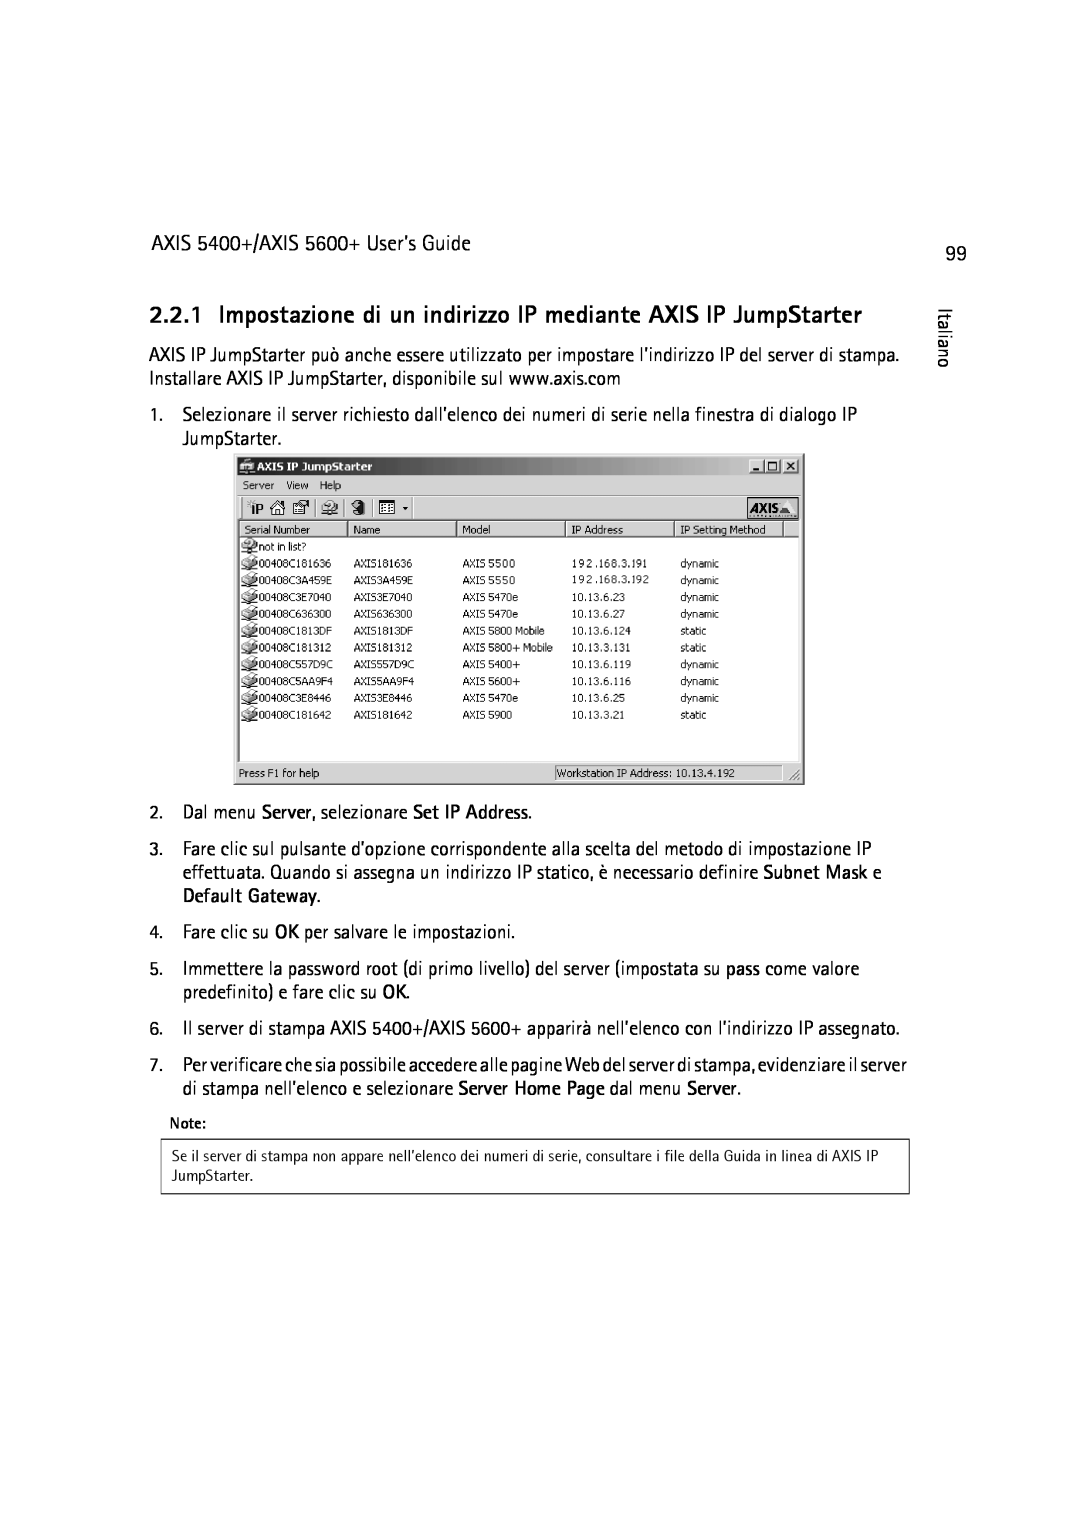 Dell manual Impostazione di un indirizzo IP mediante AXIS IP JumpStarter, AXIS 5400+/AXIS 5600+ User’s Guide 